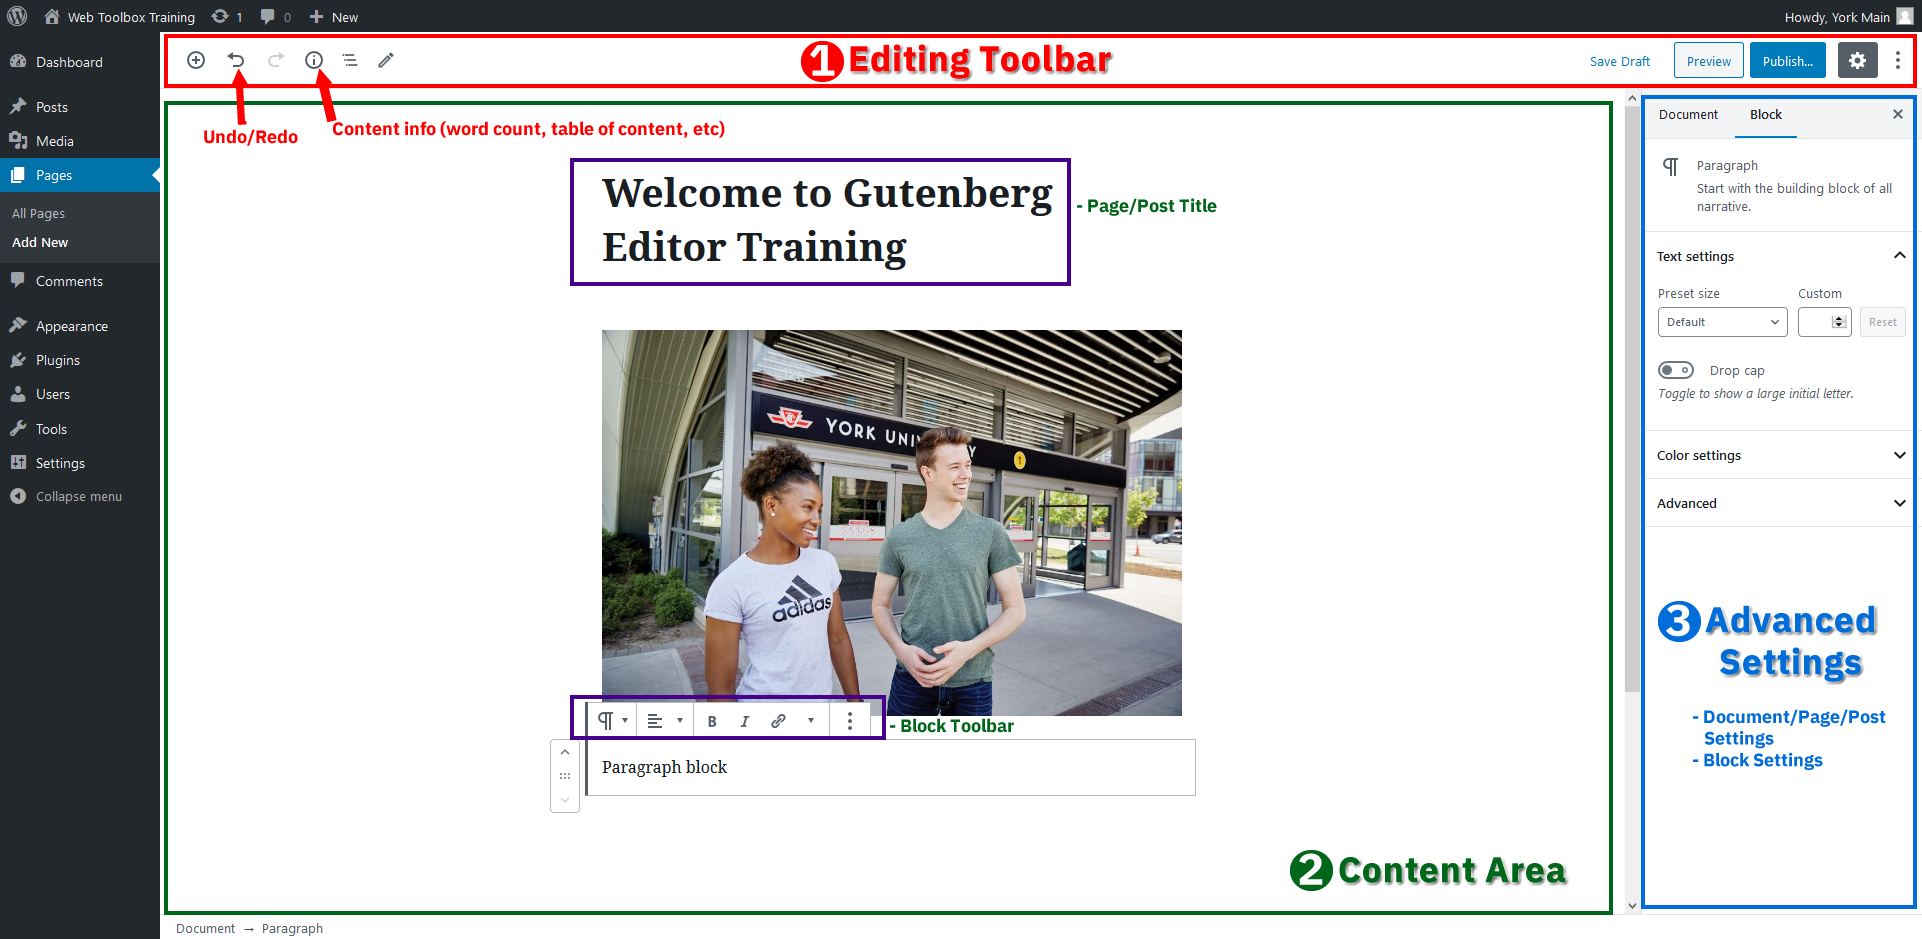 The Gutenberg Interface